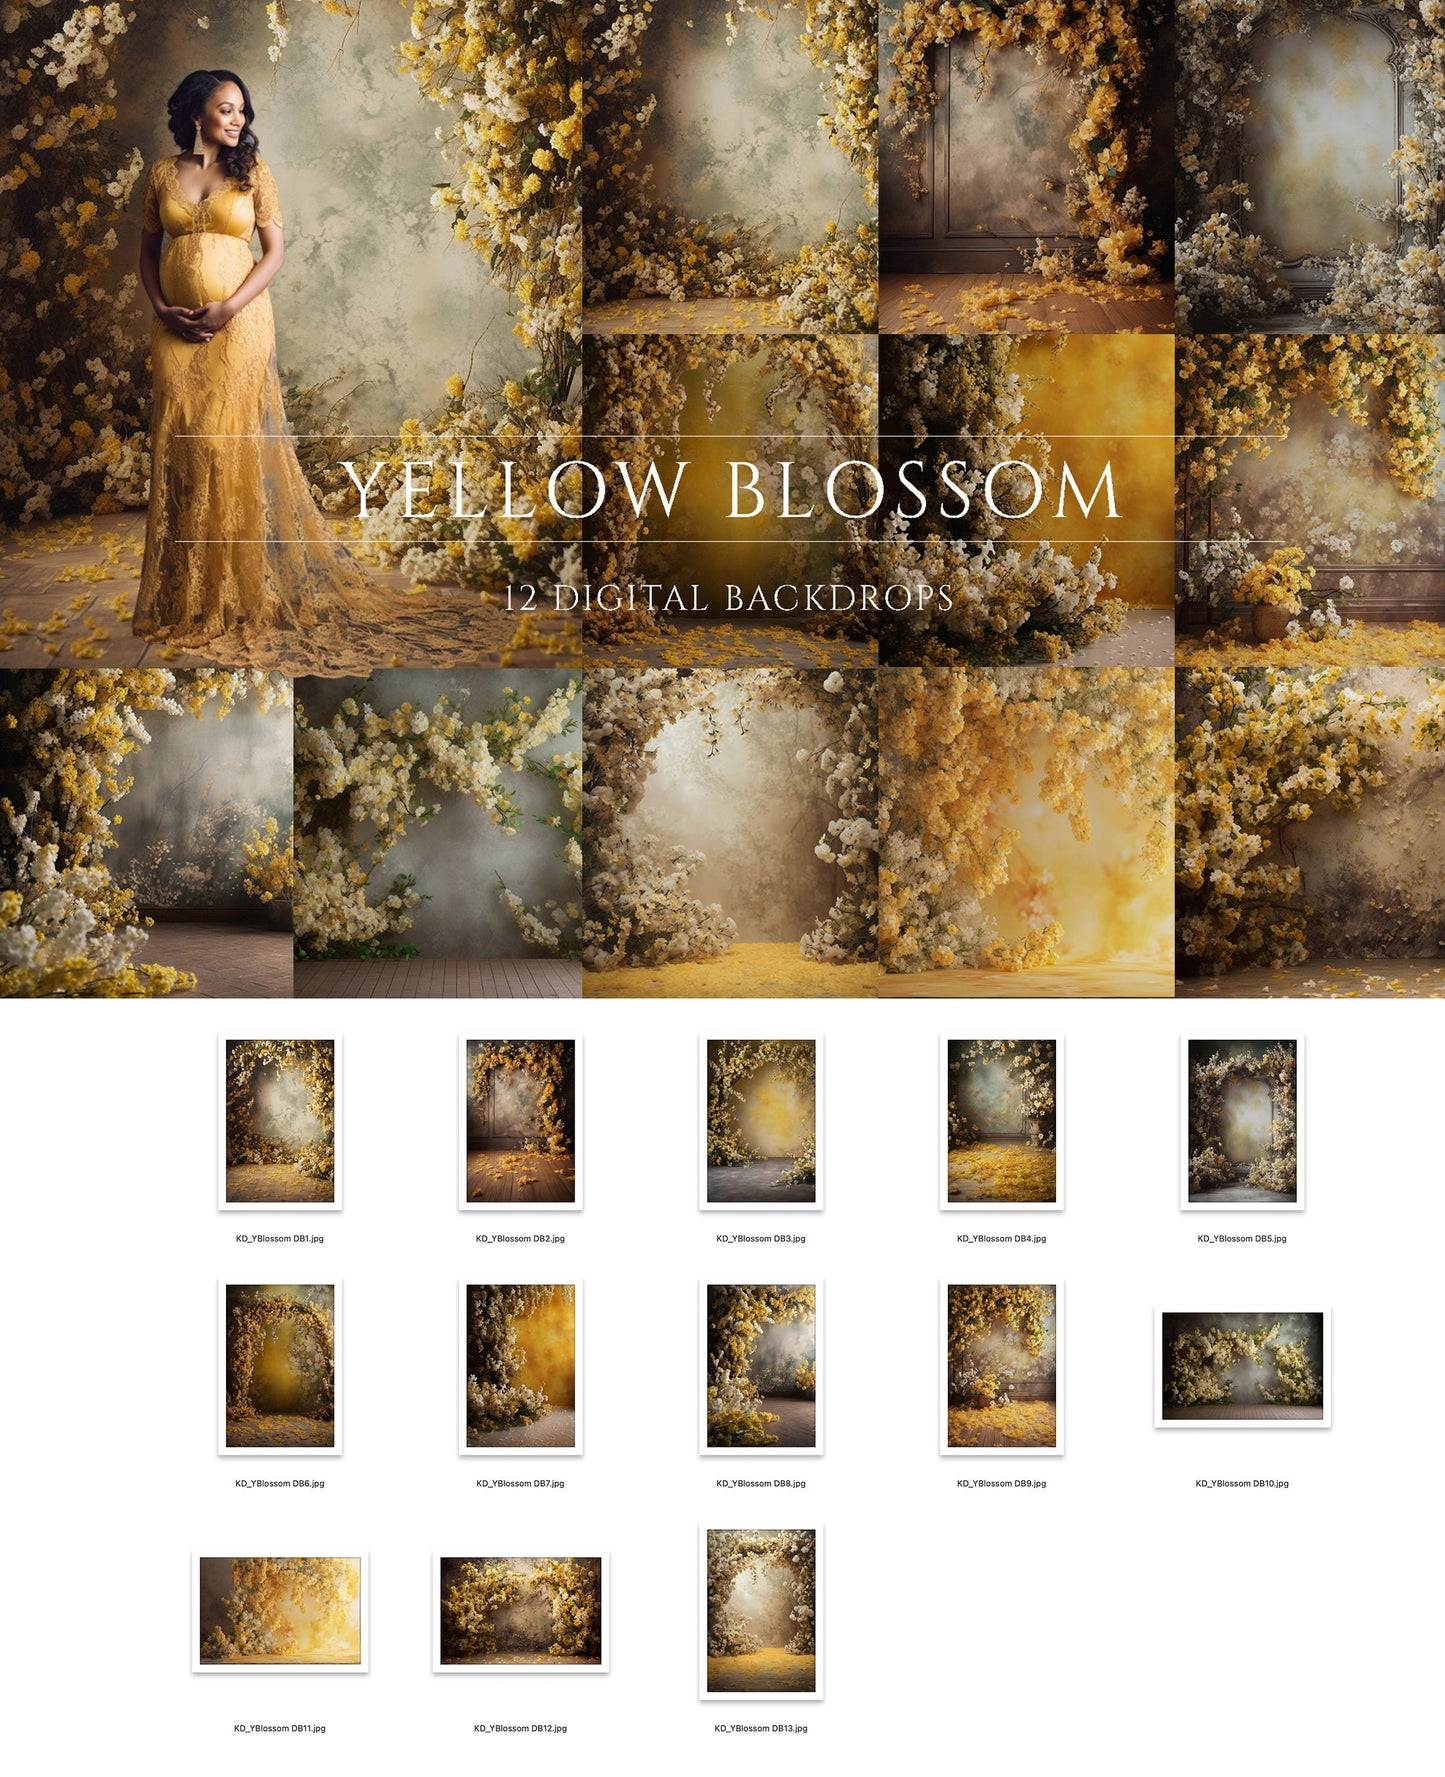 12 Yellow Blossom Floral Digital Backdrops